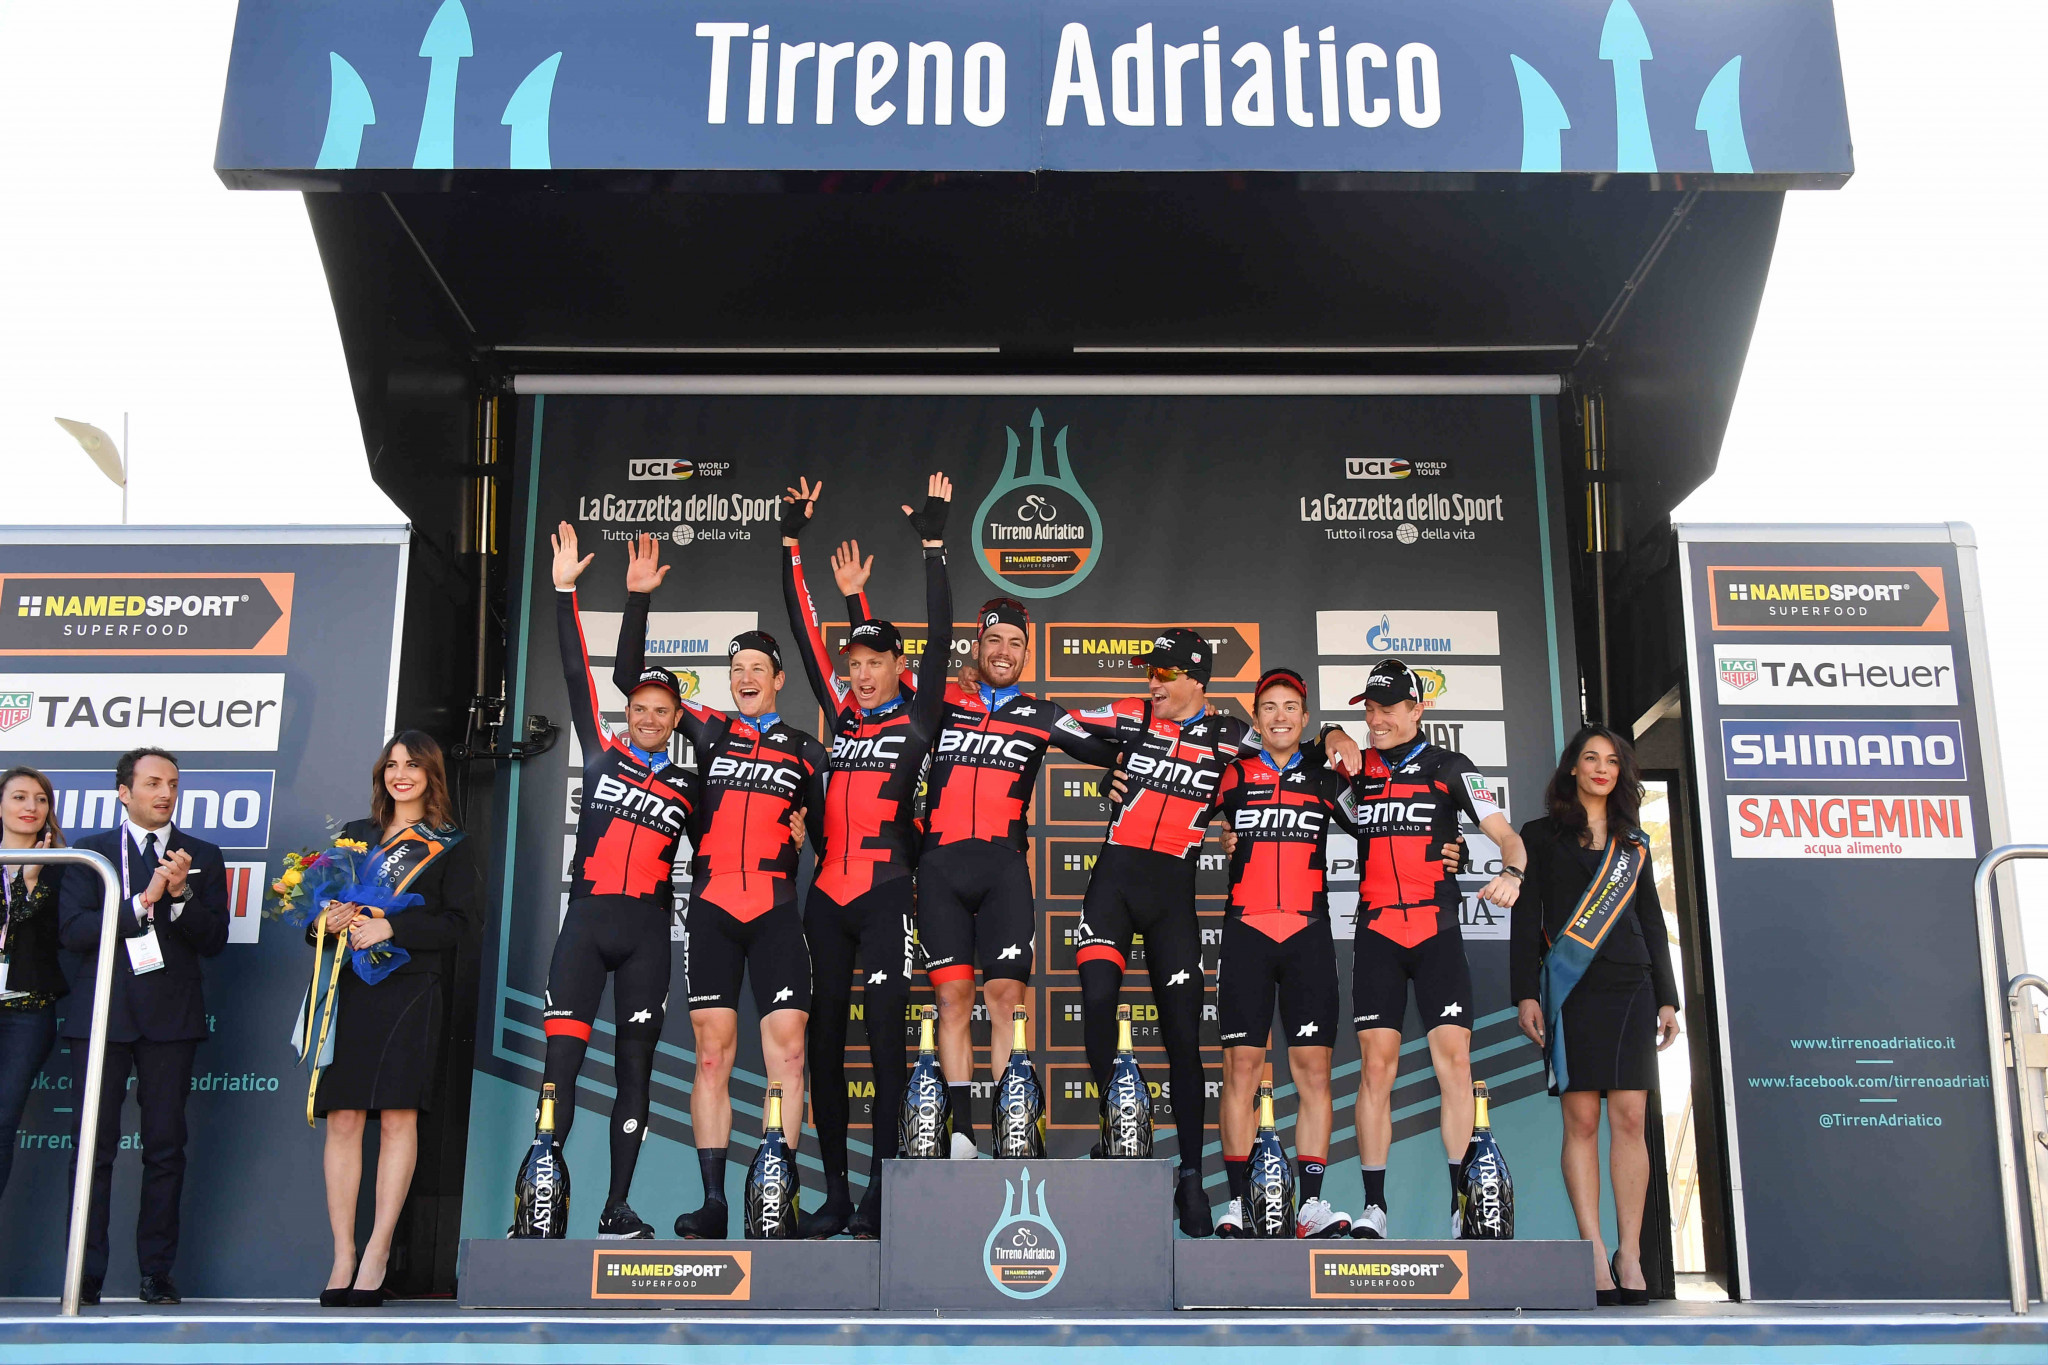 BMC Racing earned team time trial victory at Tirreno Adriatico ©LaPresse